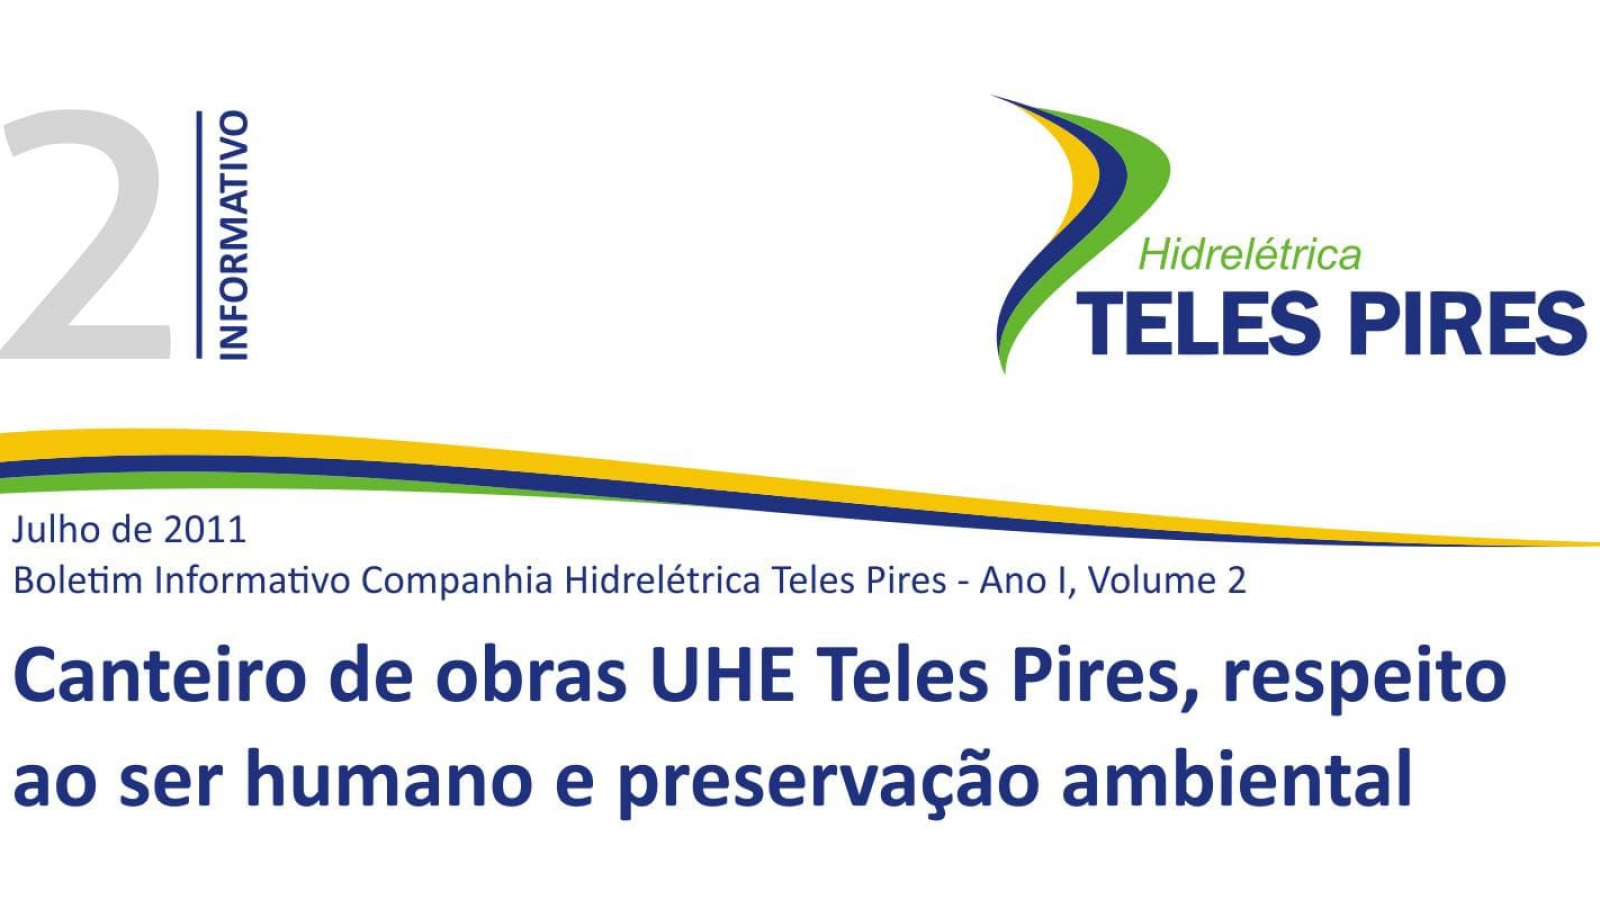  Boletim Informativo Companhia Hidrelétrica Teles Pires - Volume 2